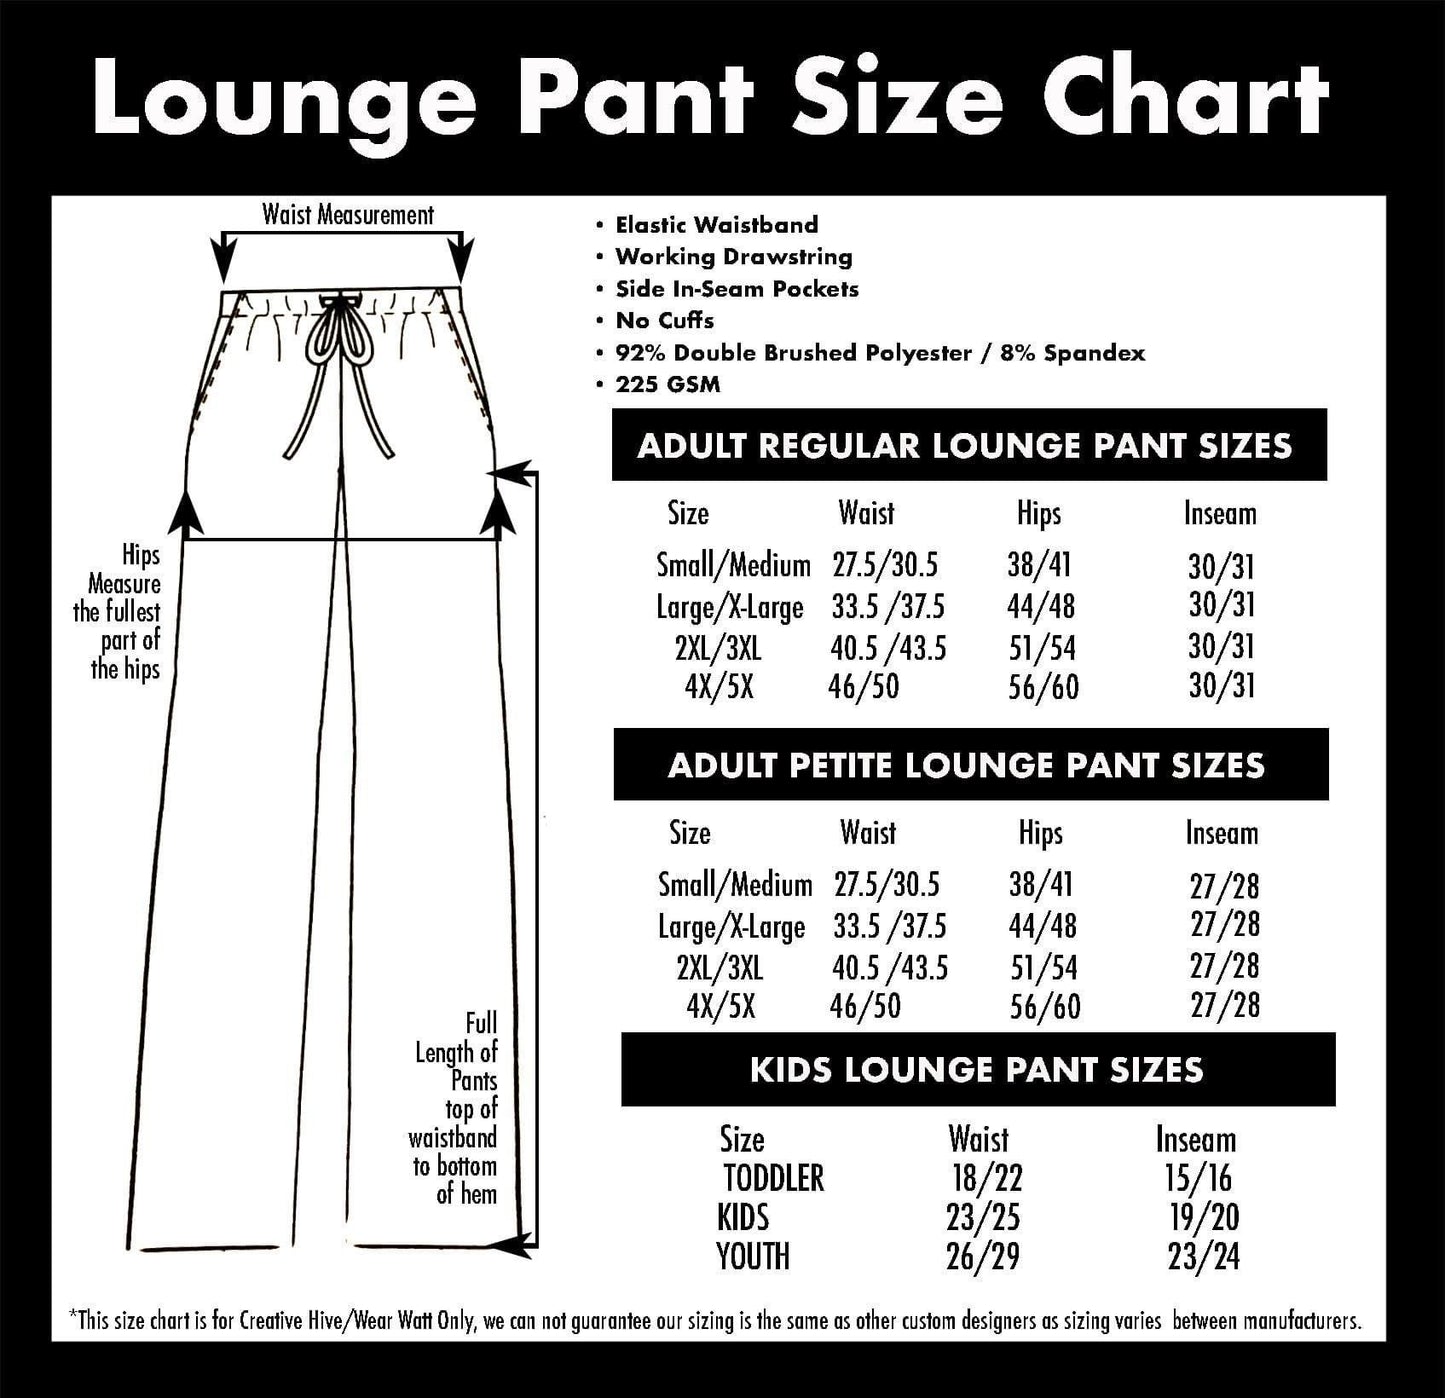 Daisy Chain - Lounge Pants